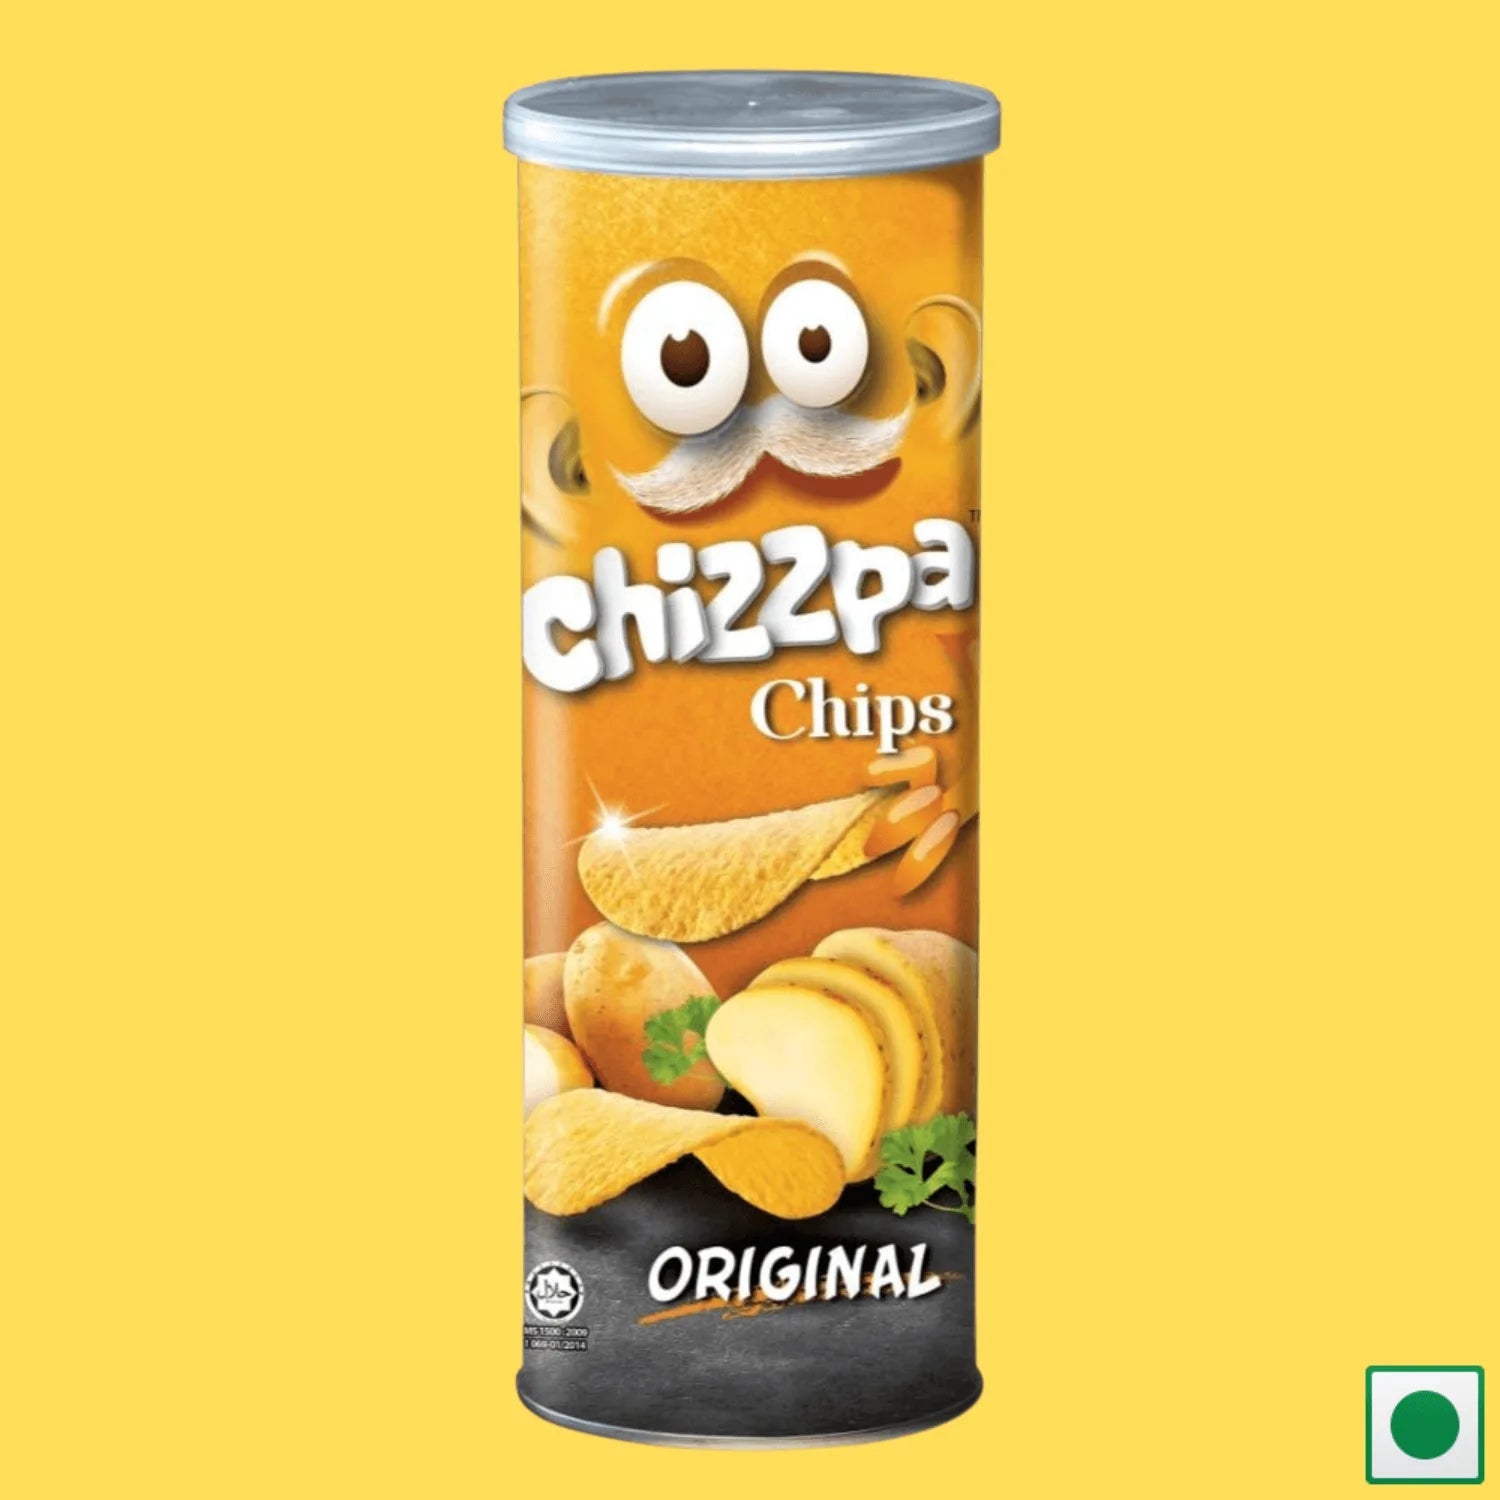 Chizzpa Original Chips, 160g (Imported) - Super 7 Mart